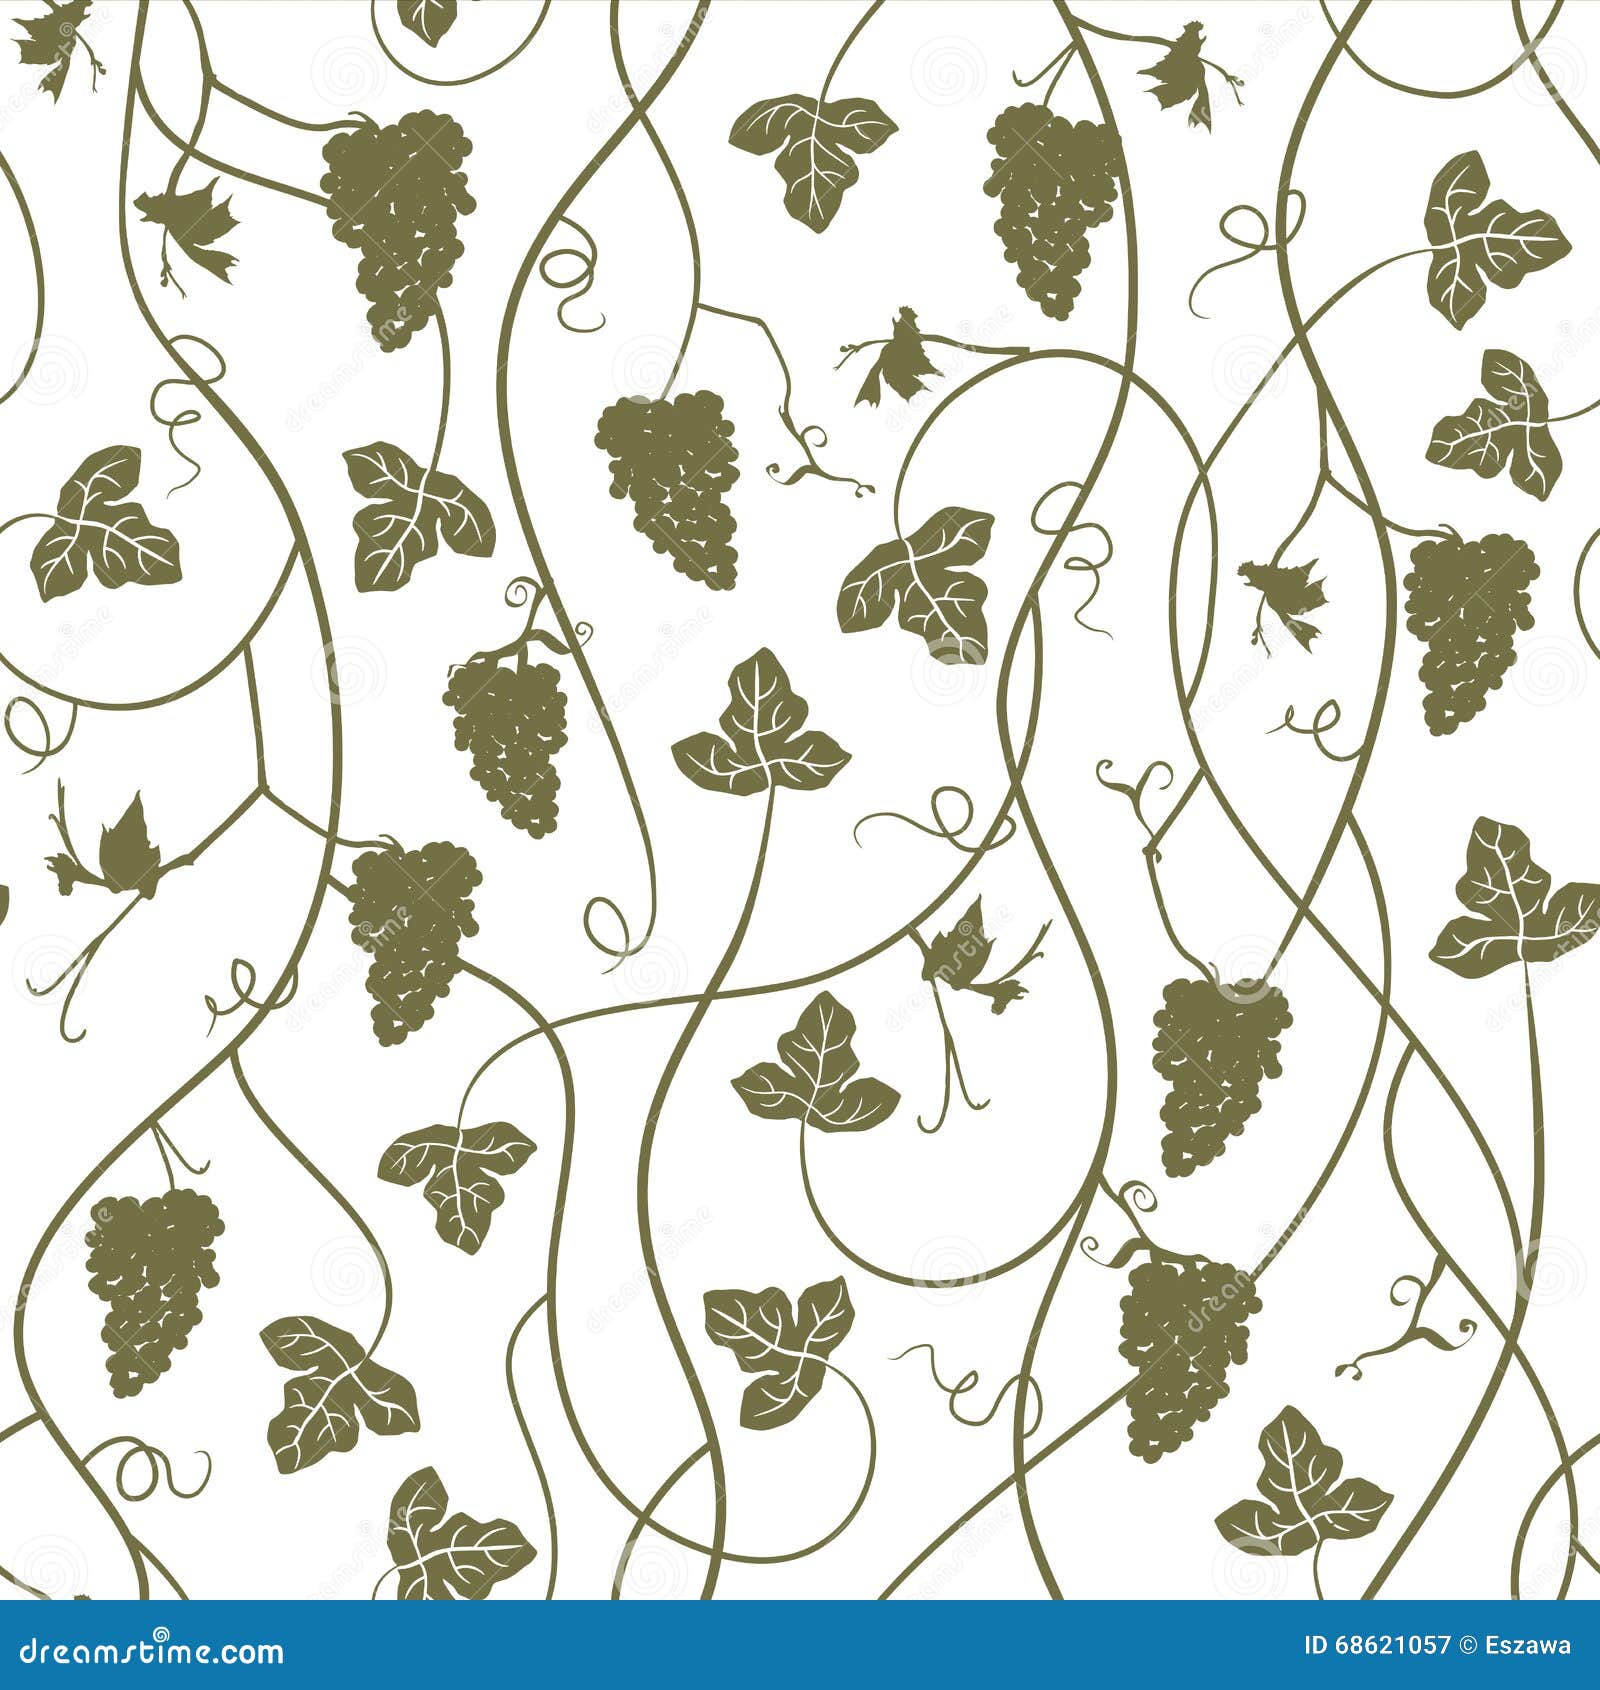 grapes - repetitive seamless wallpaper,  